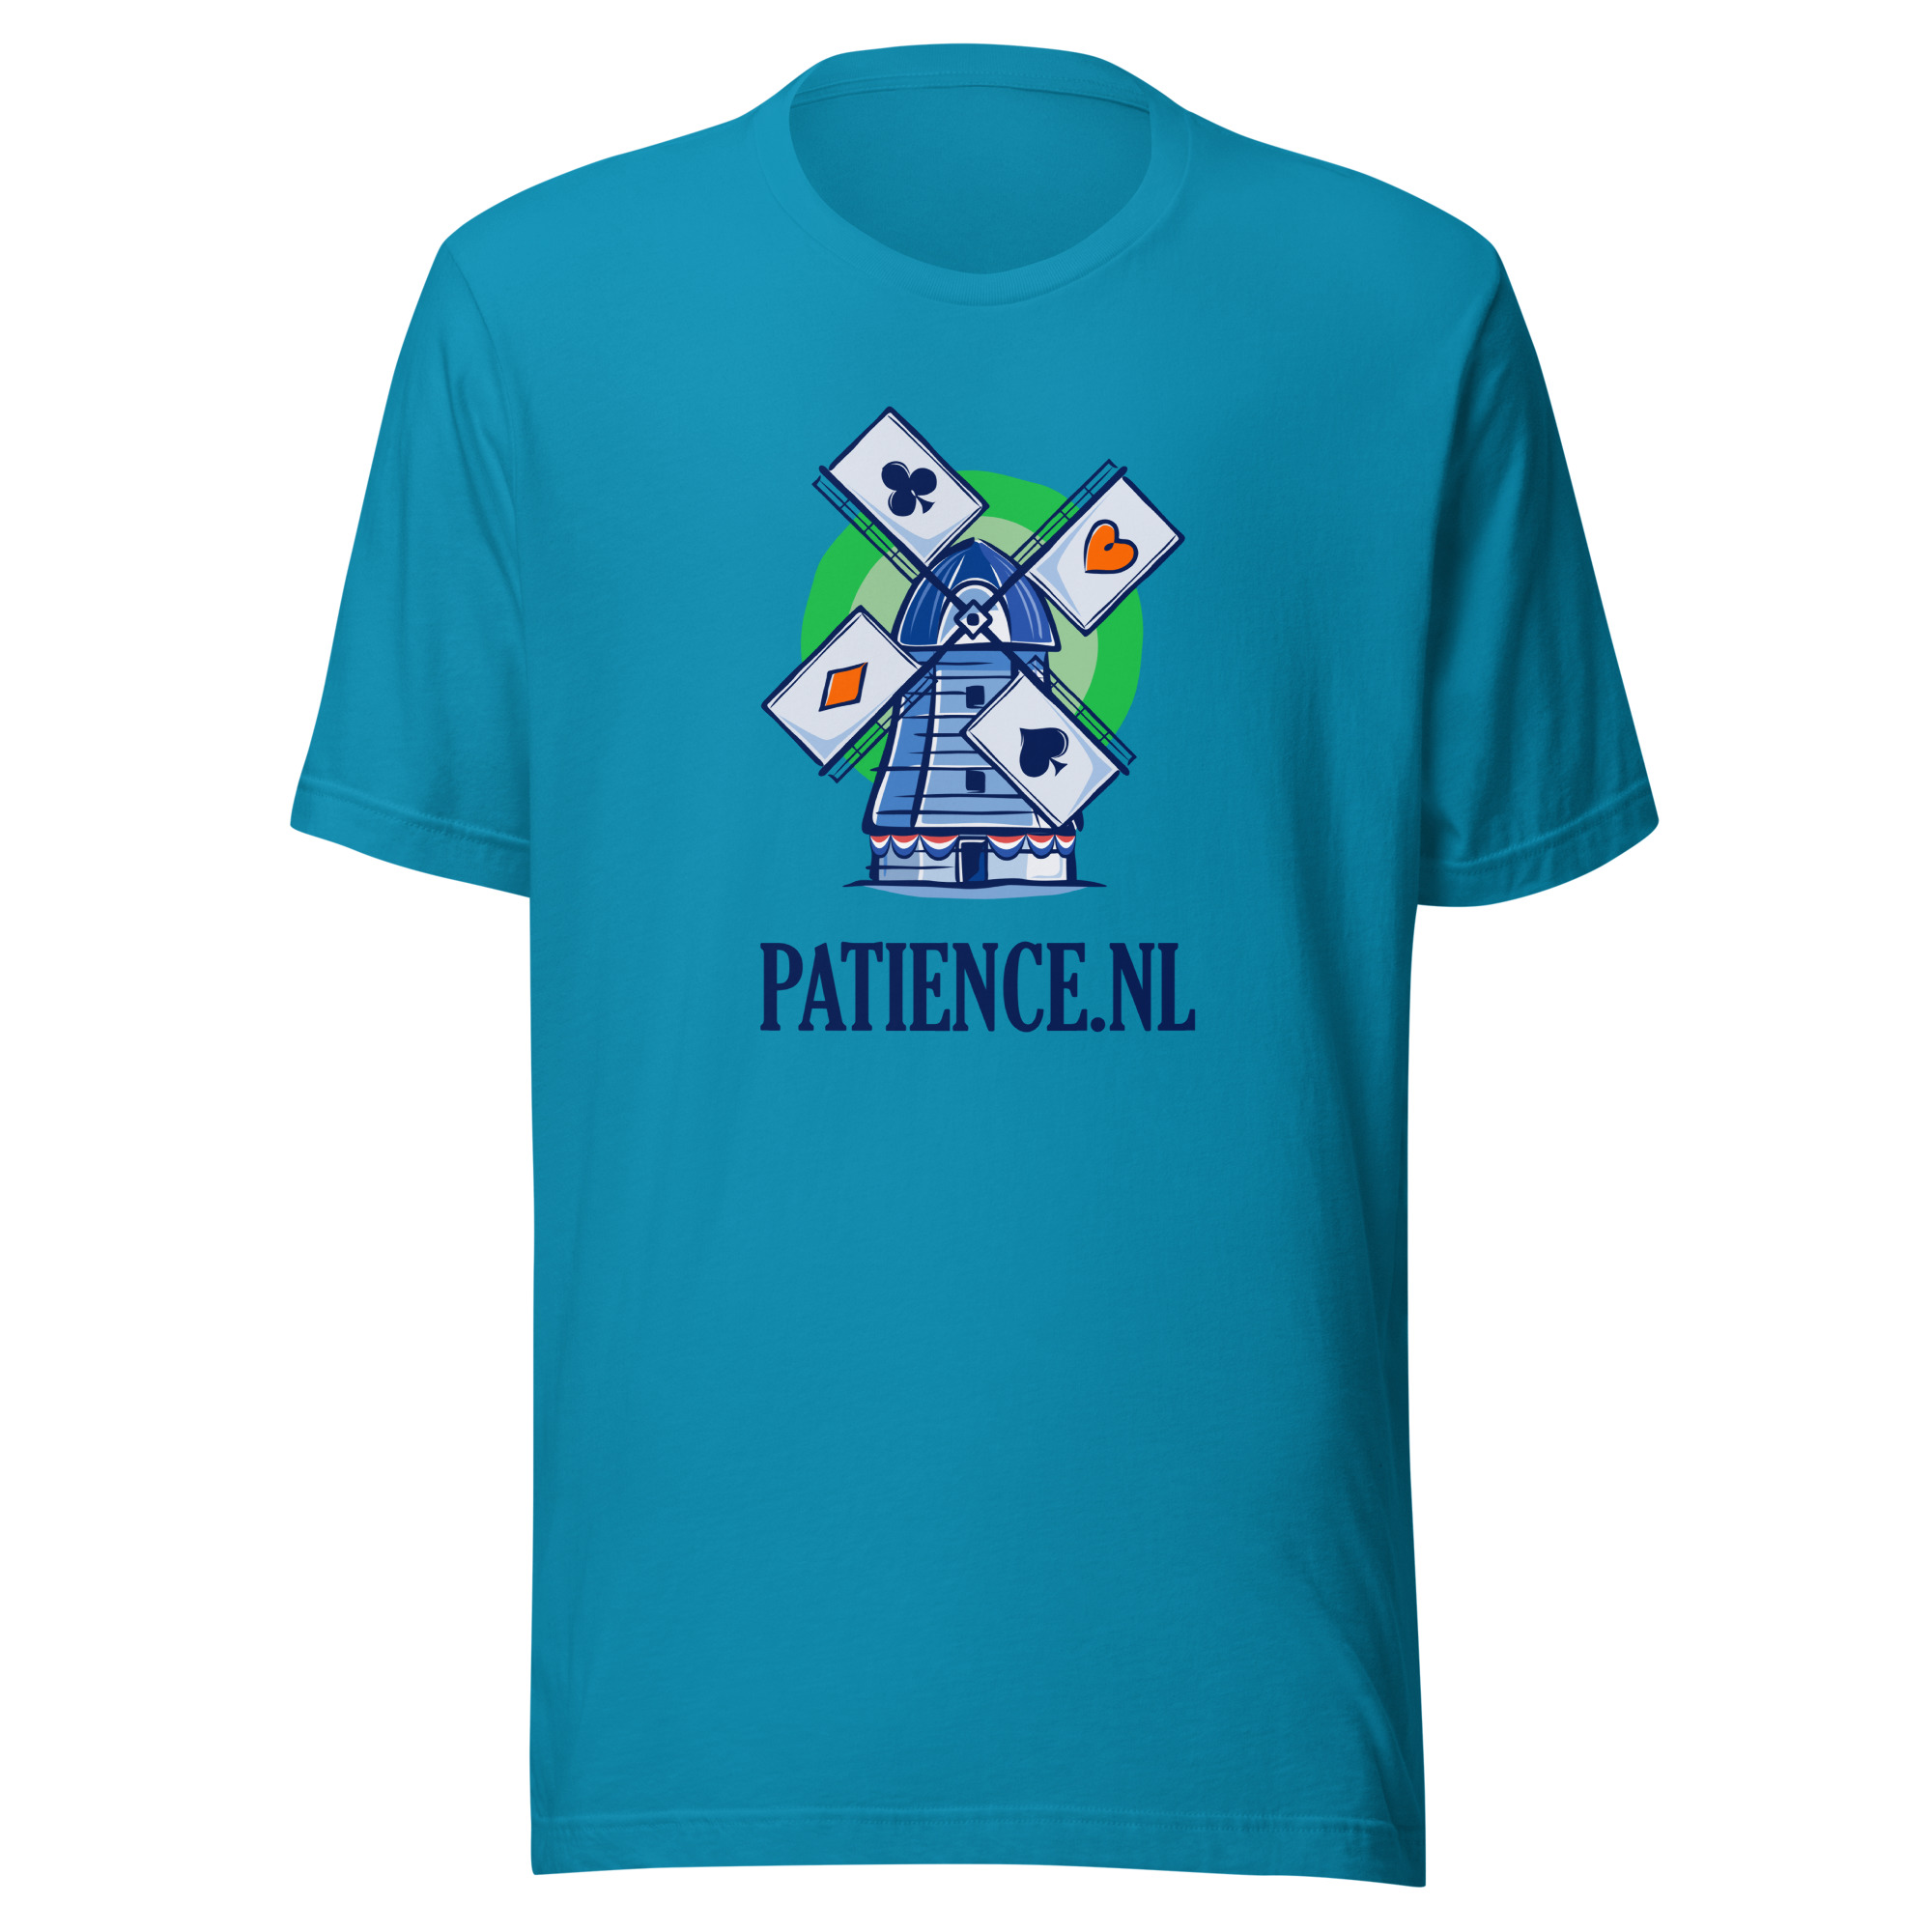 T-shirt Patience.nl Blauwig